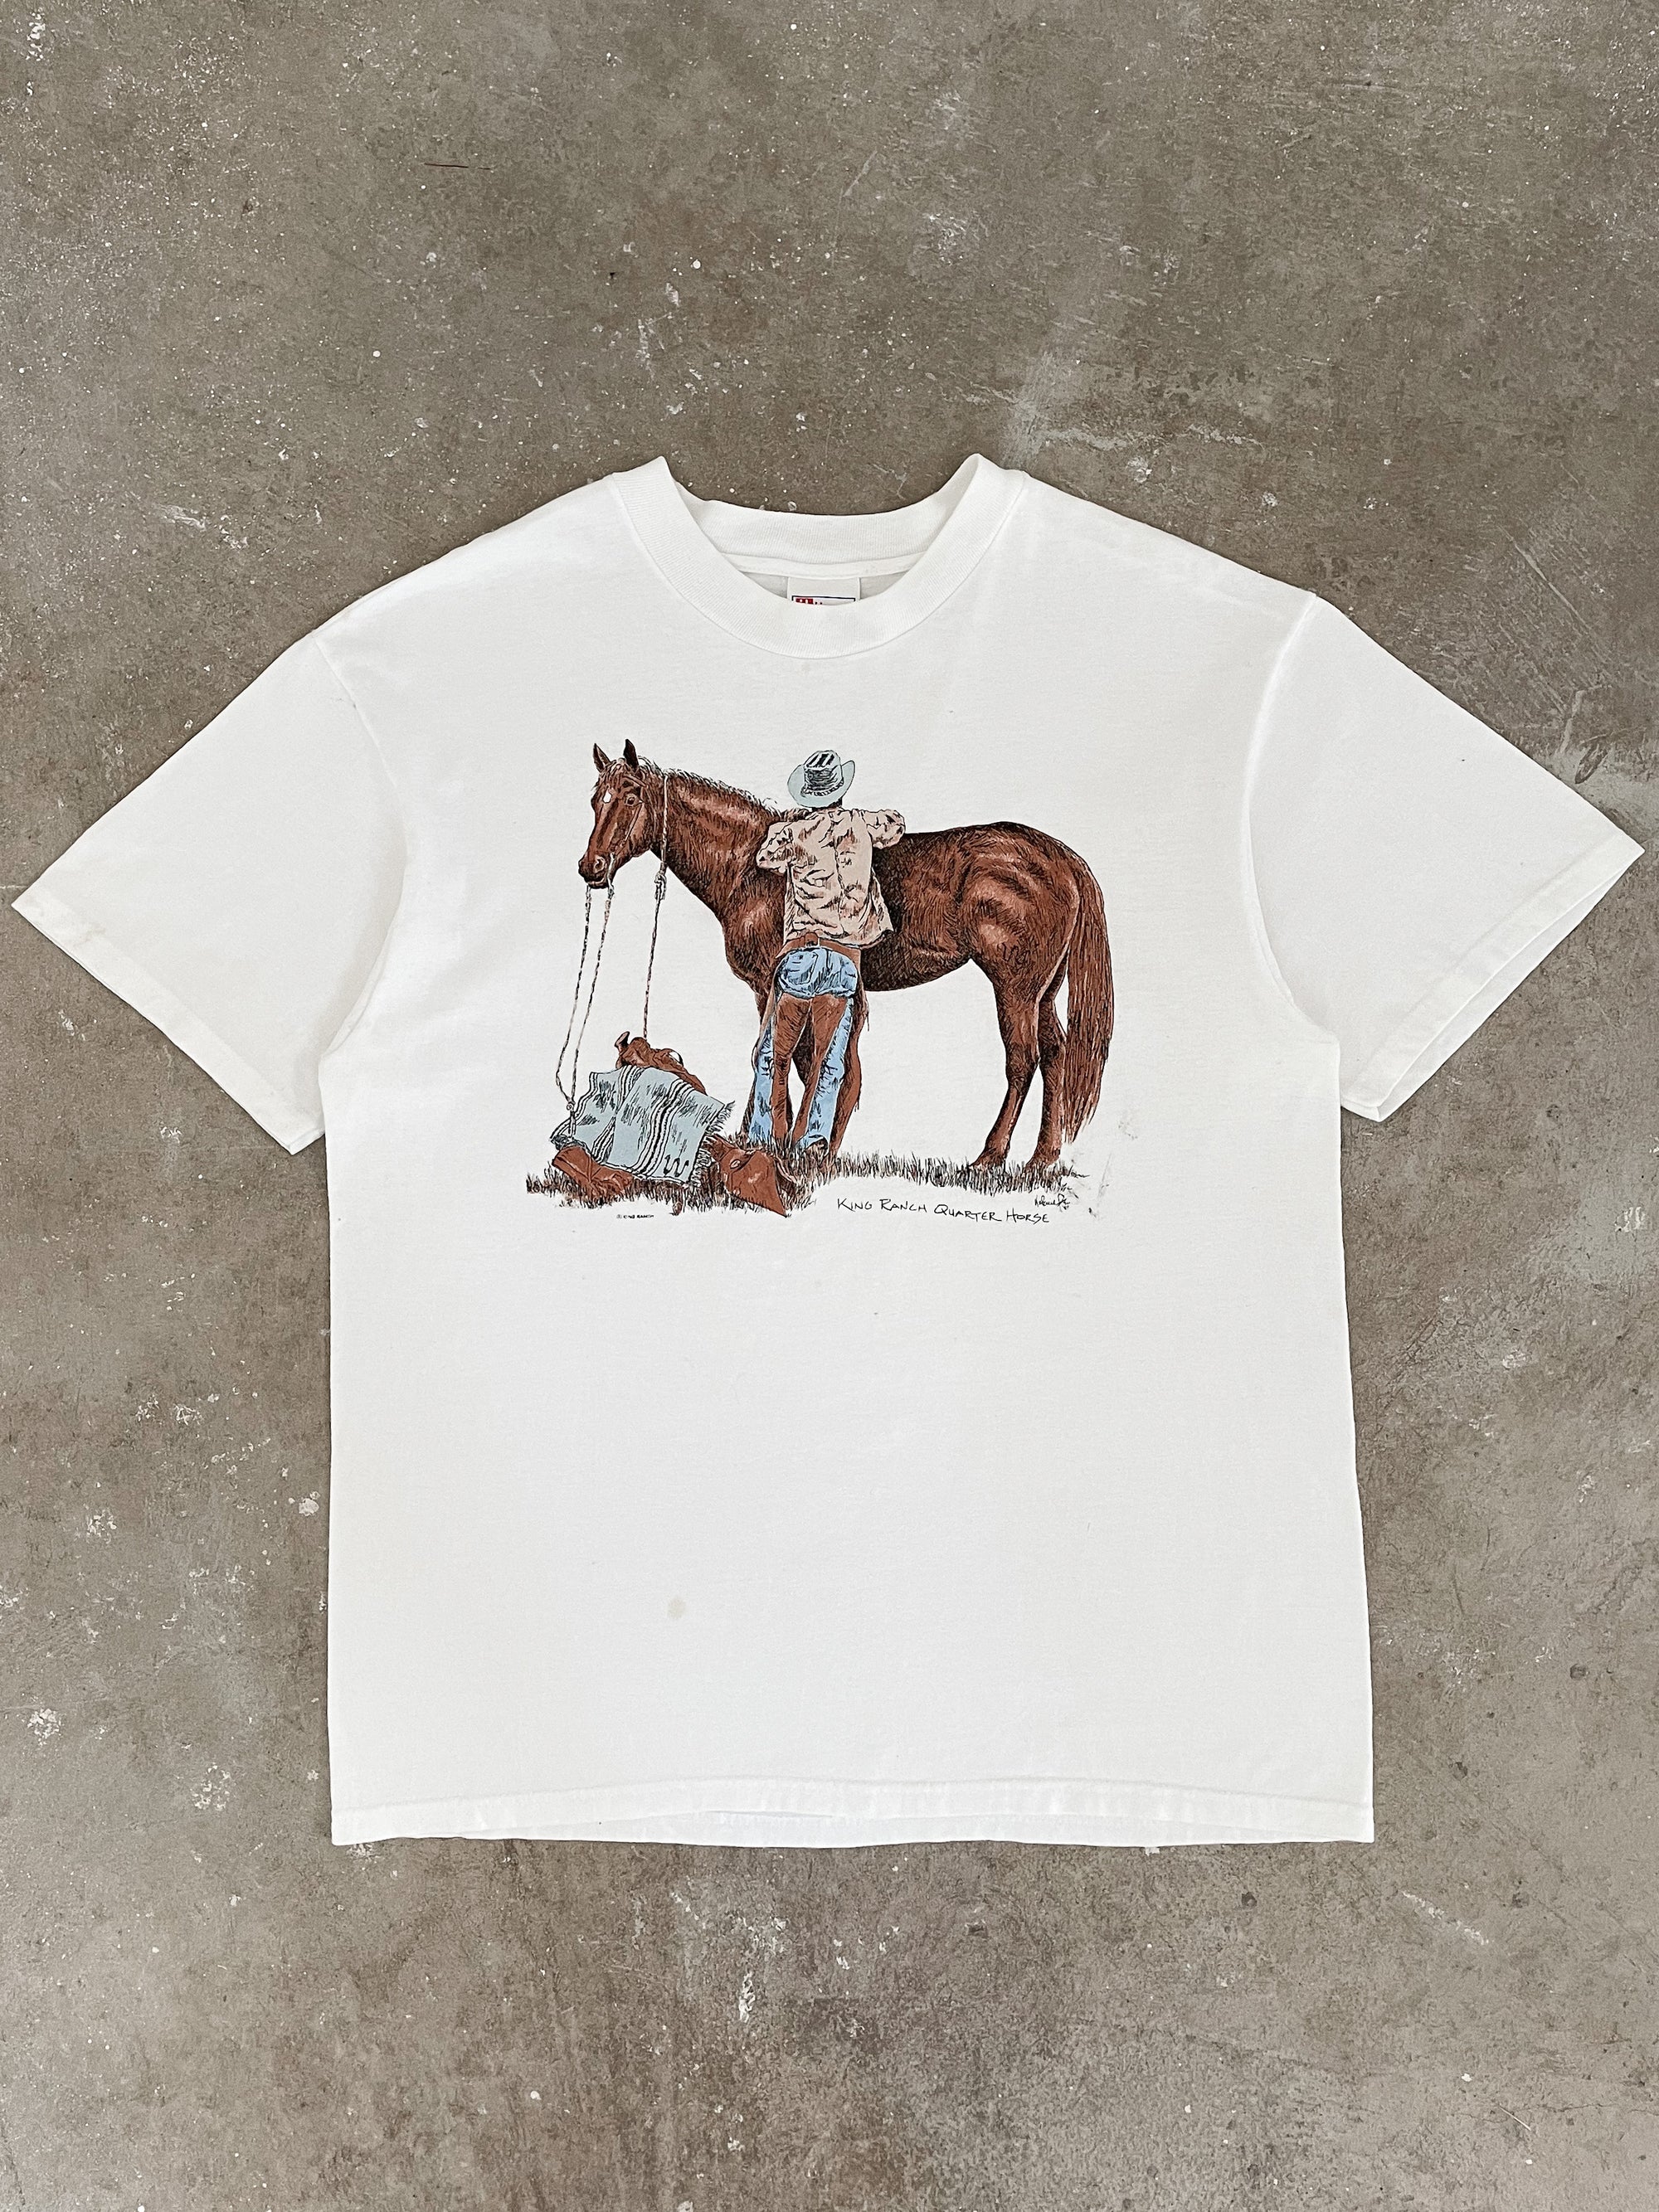 1990s “King Ranch Quarter Horse” Tee (L)